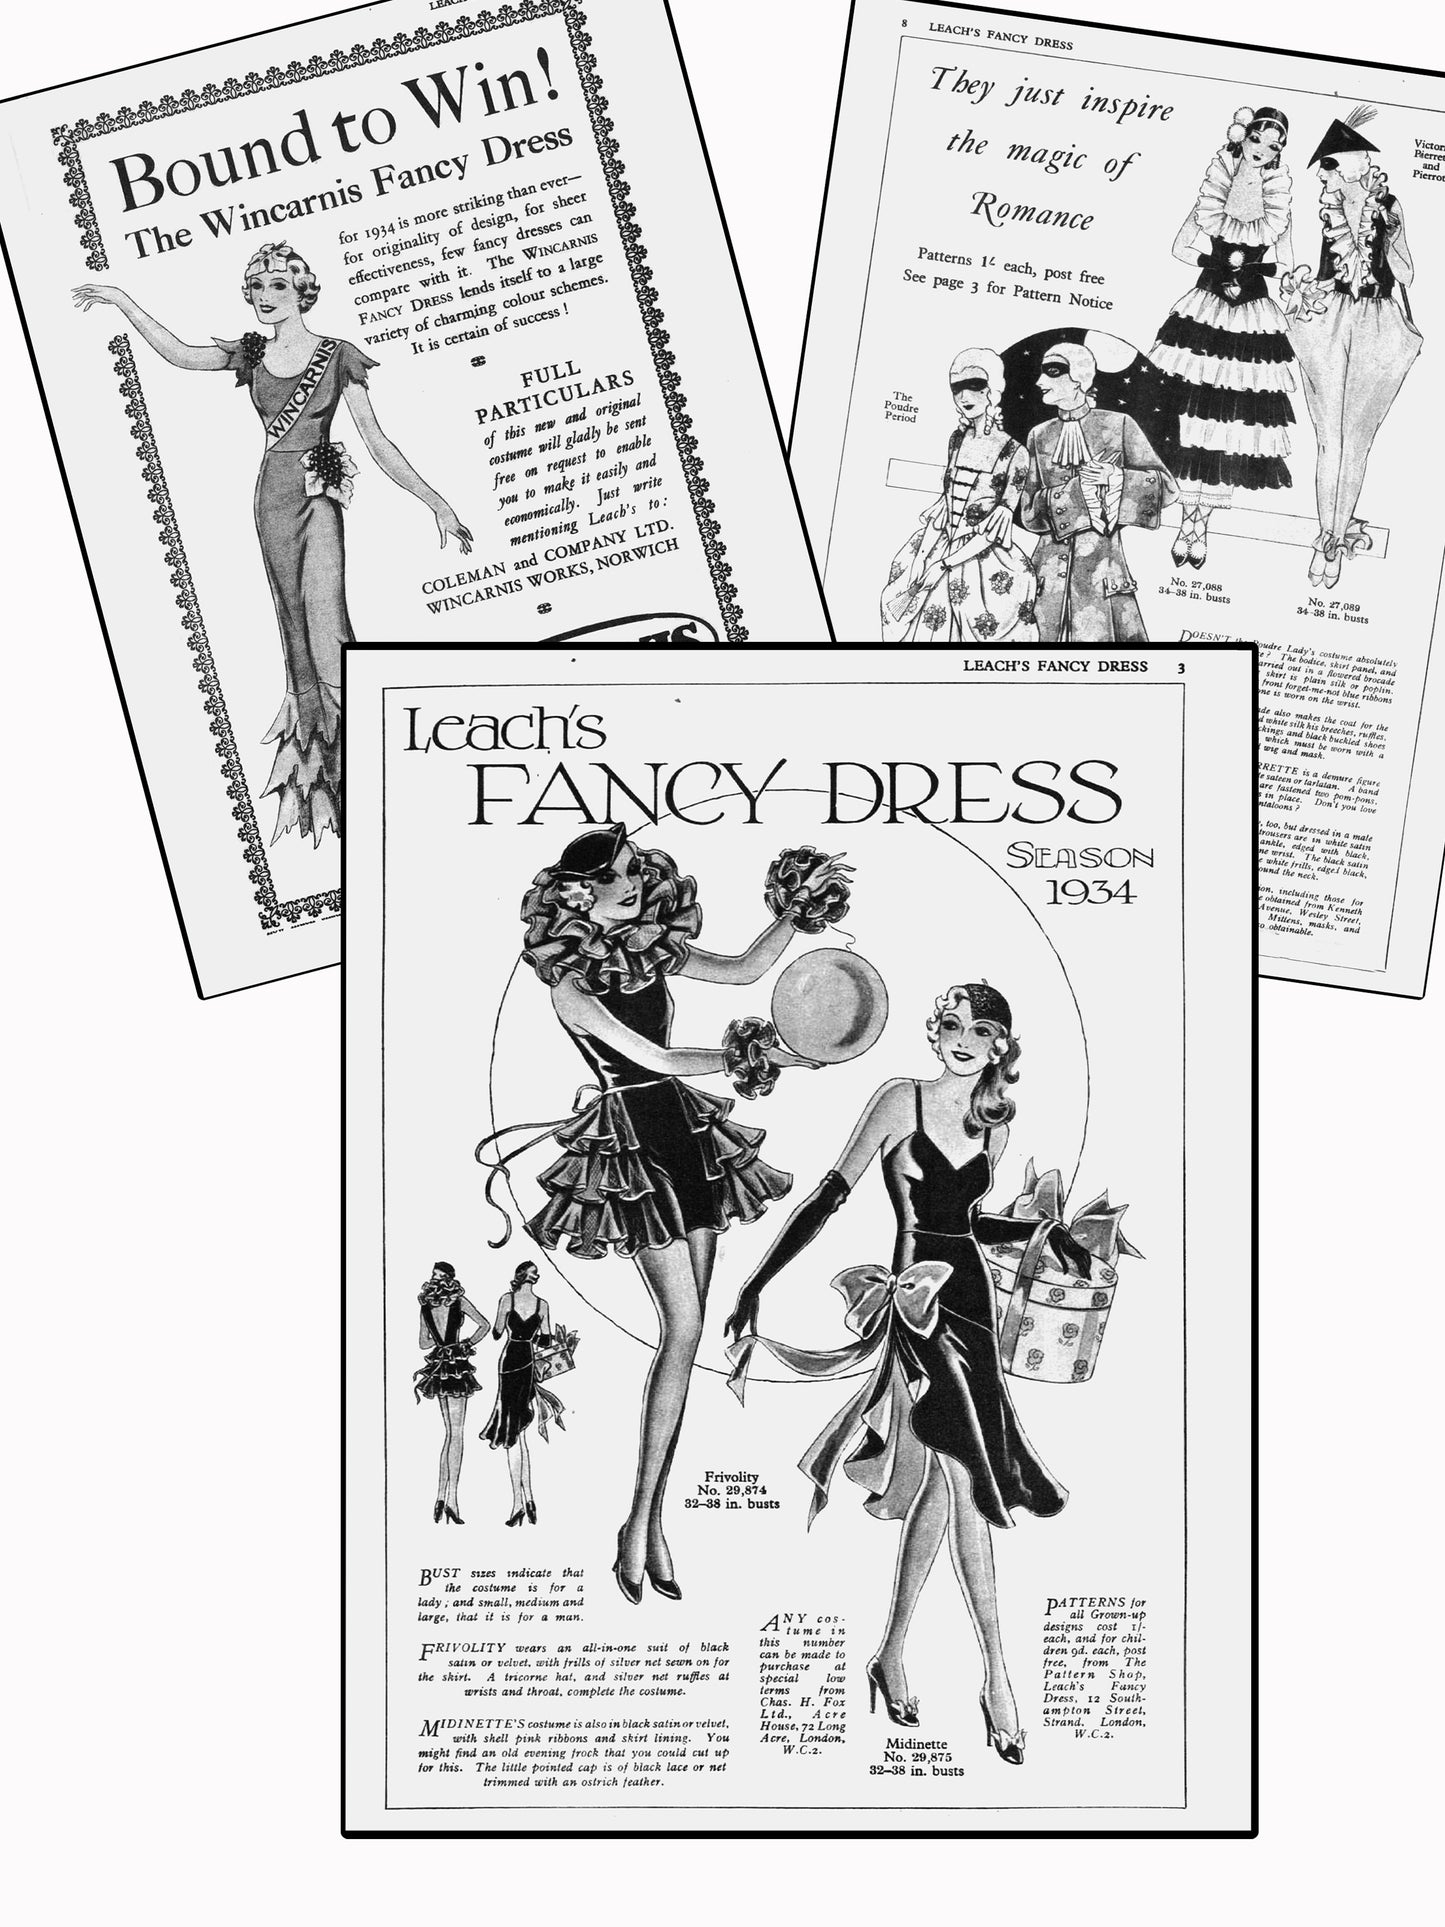 FREE 1930s Leach's Fancy Dress Magazine - PDF Download